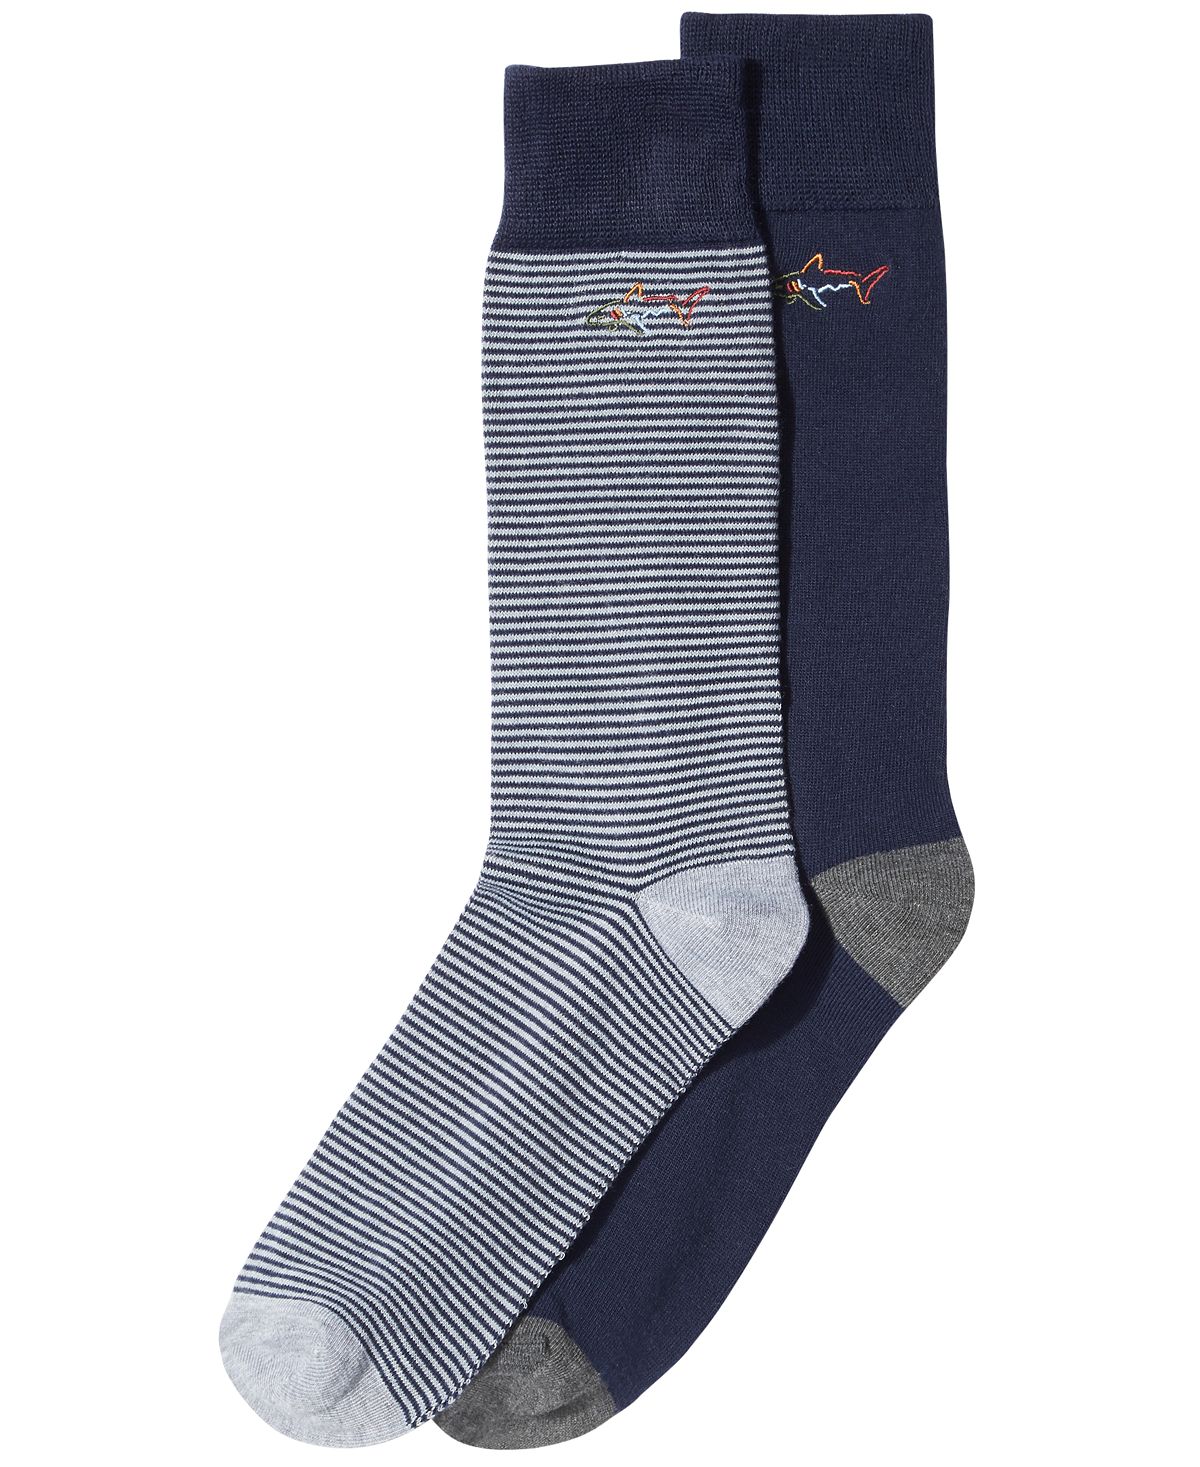 Greg Norman 2-pk. Striped Dress Socks Navy